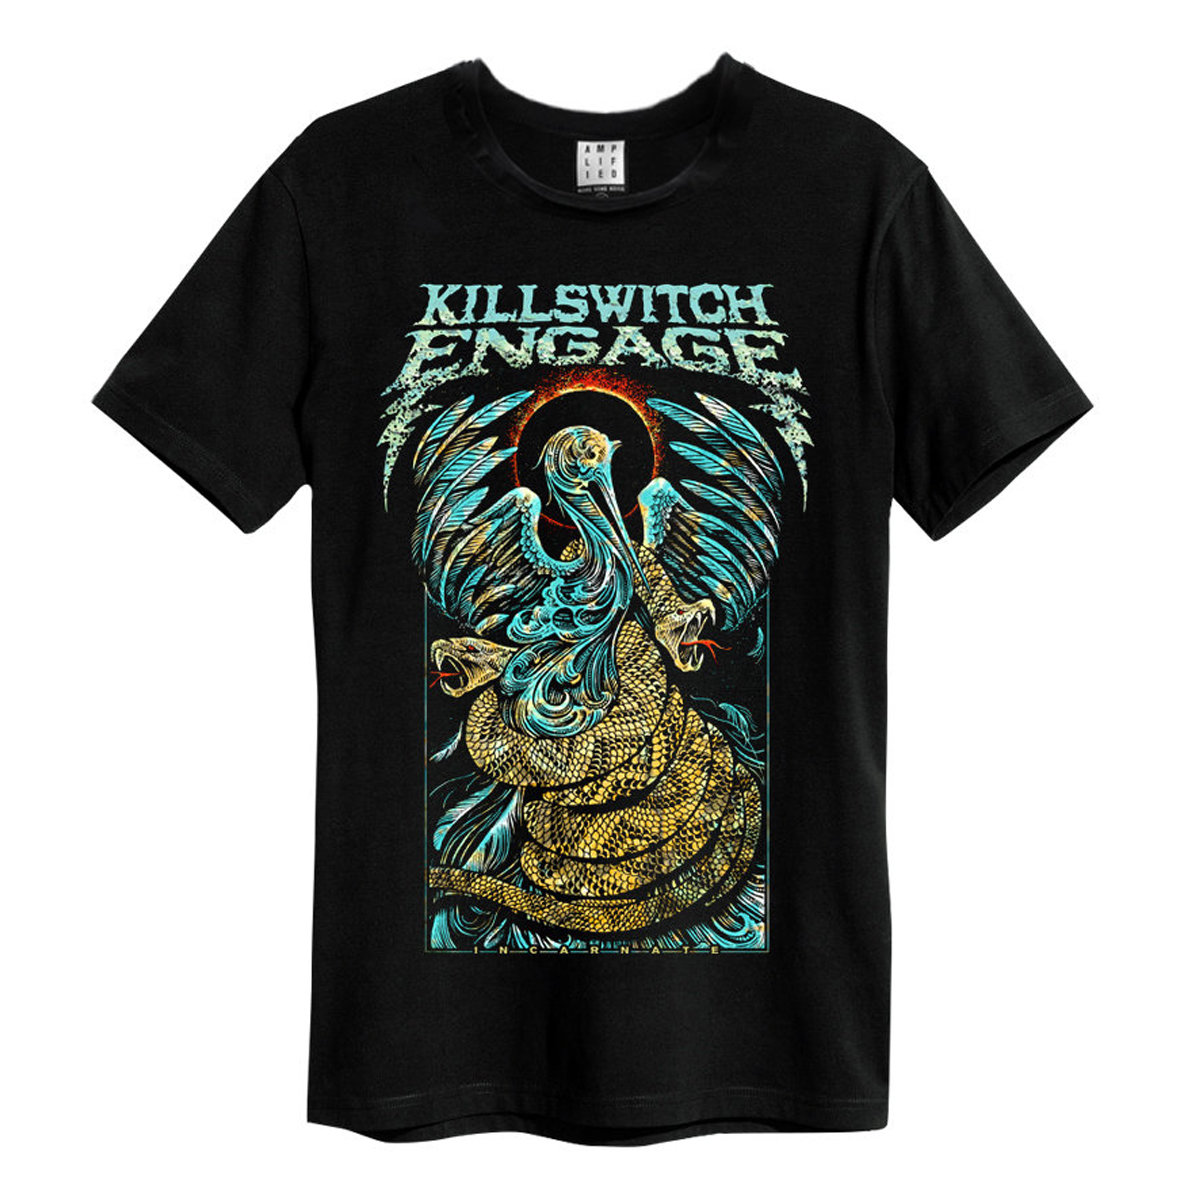 KILLSWITCH CRANE | Killswitch Engage SALE Clothing®